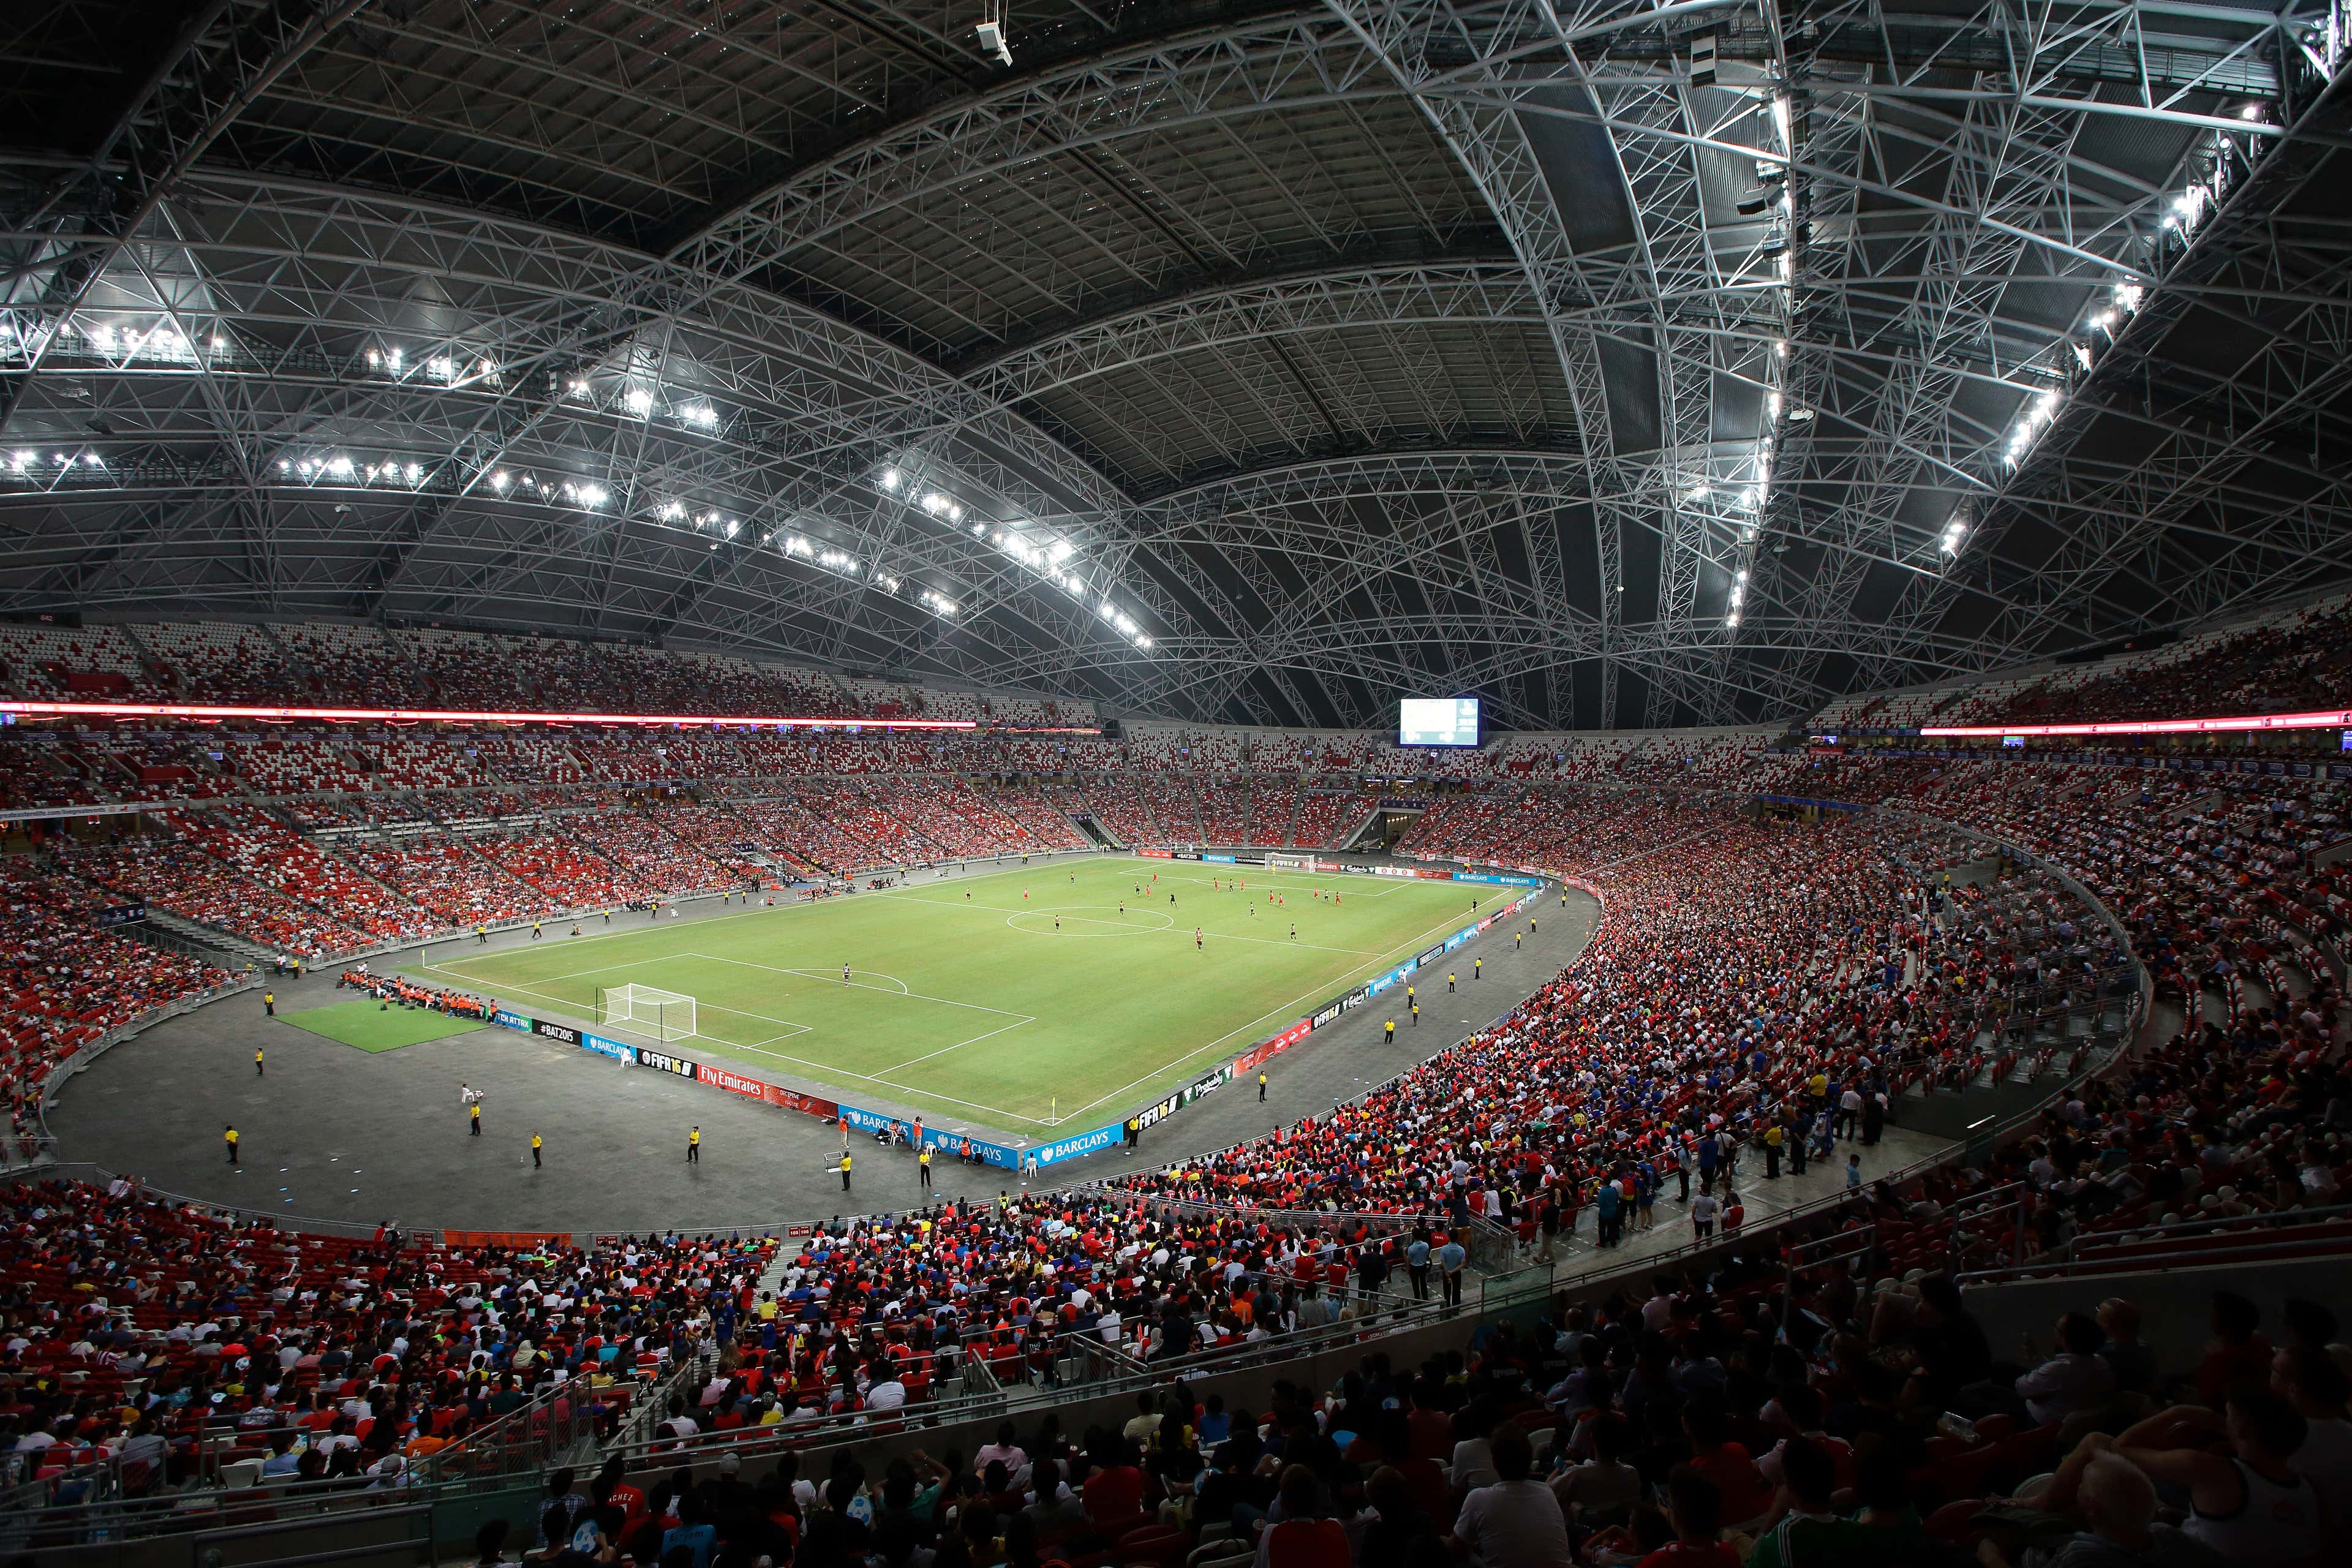 National Stadium Singapore